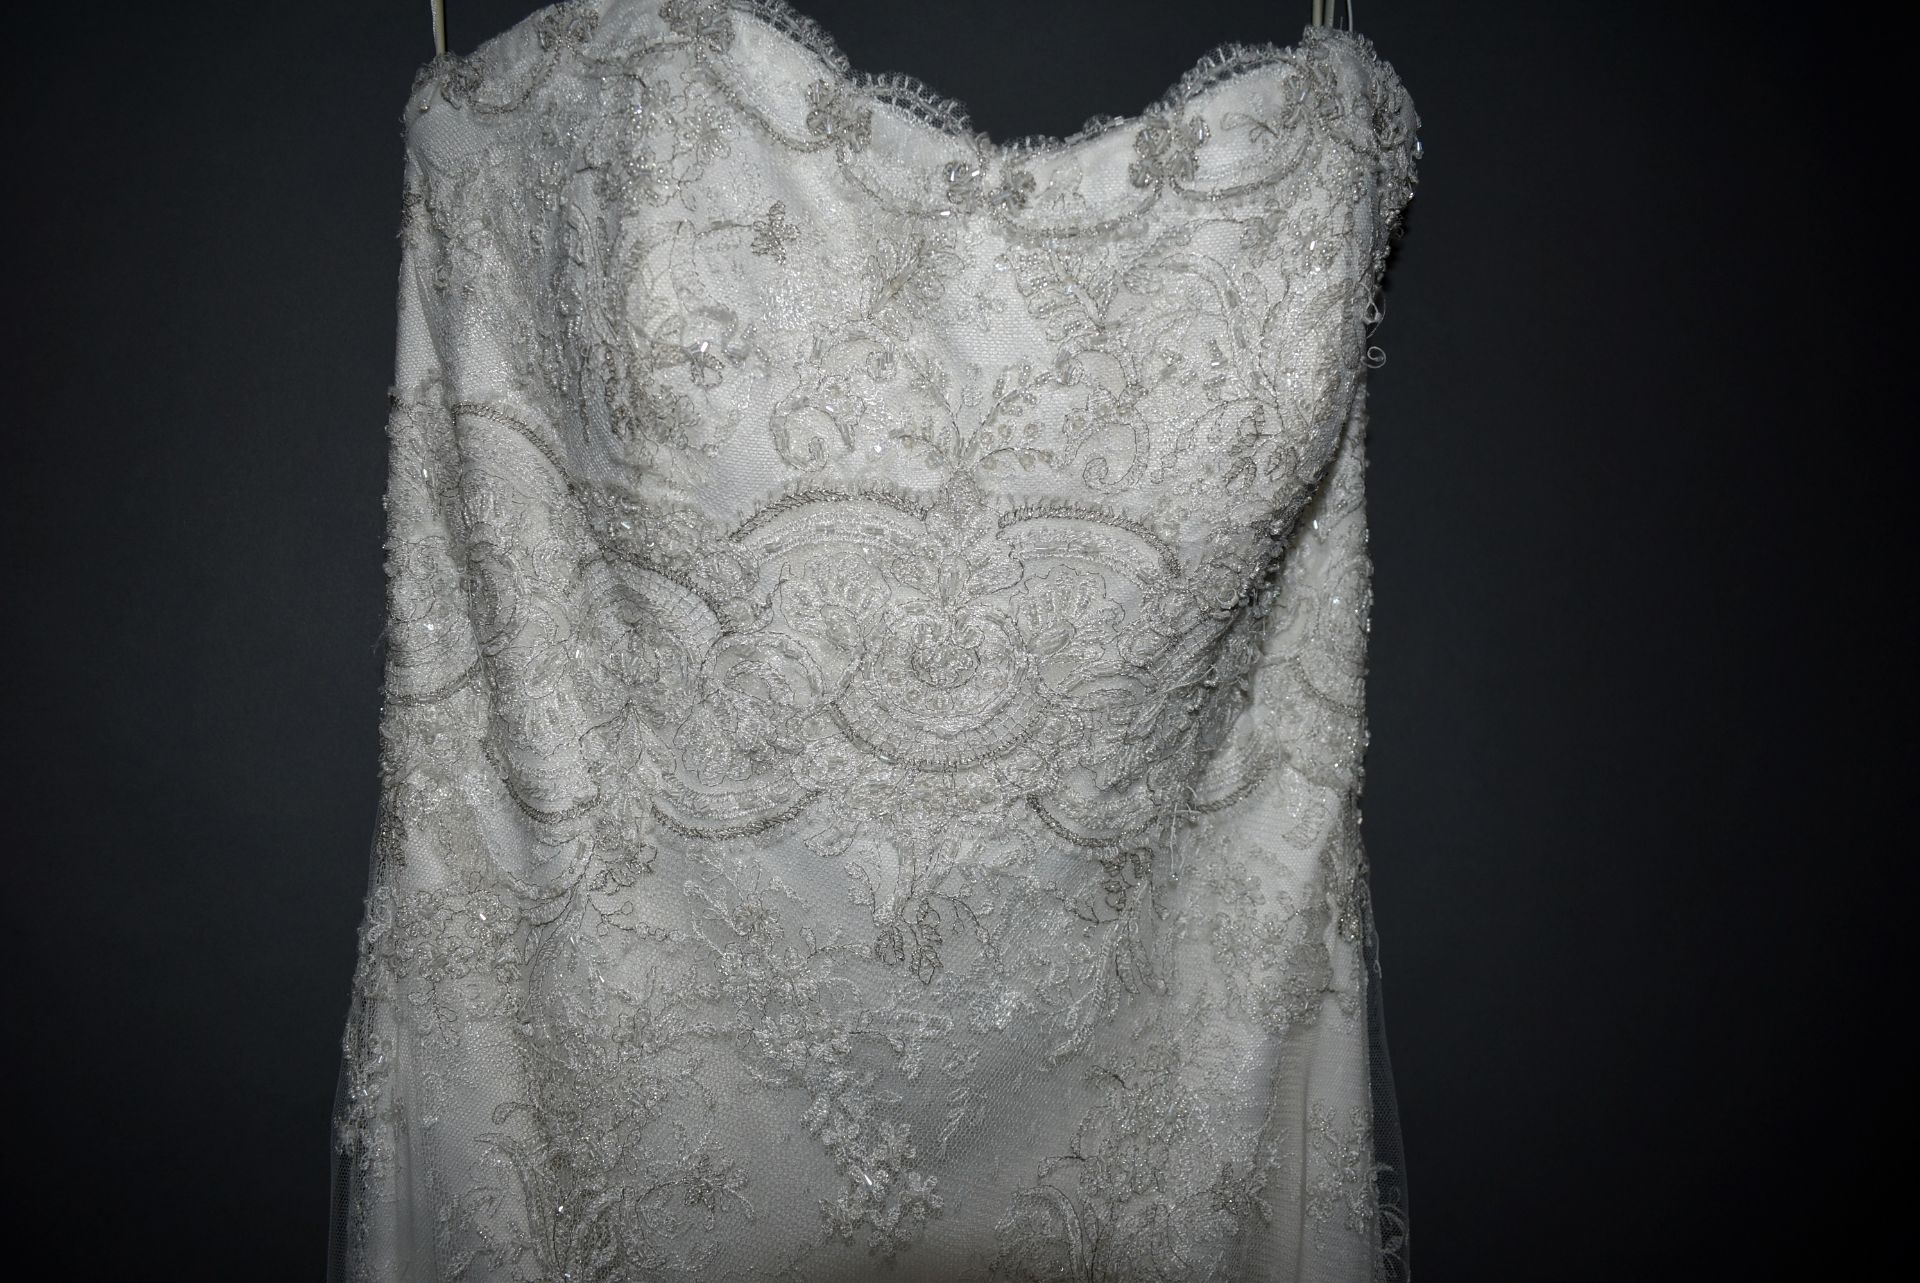 1 x LUSAN MANDONGUS Strapless Lace & Beaded Designer Wedding Dress Bridal Gown RRP £2,250 UK 12 - Image 5 of 5